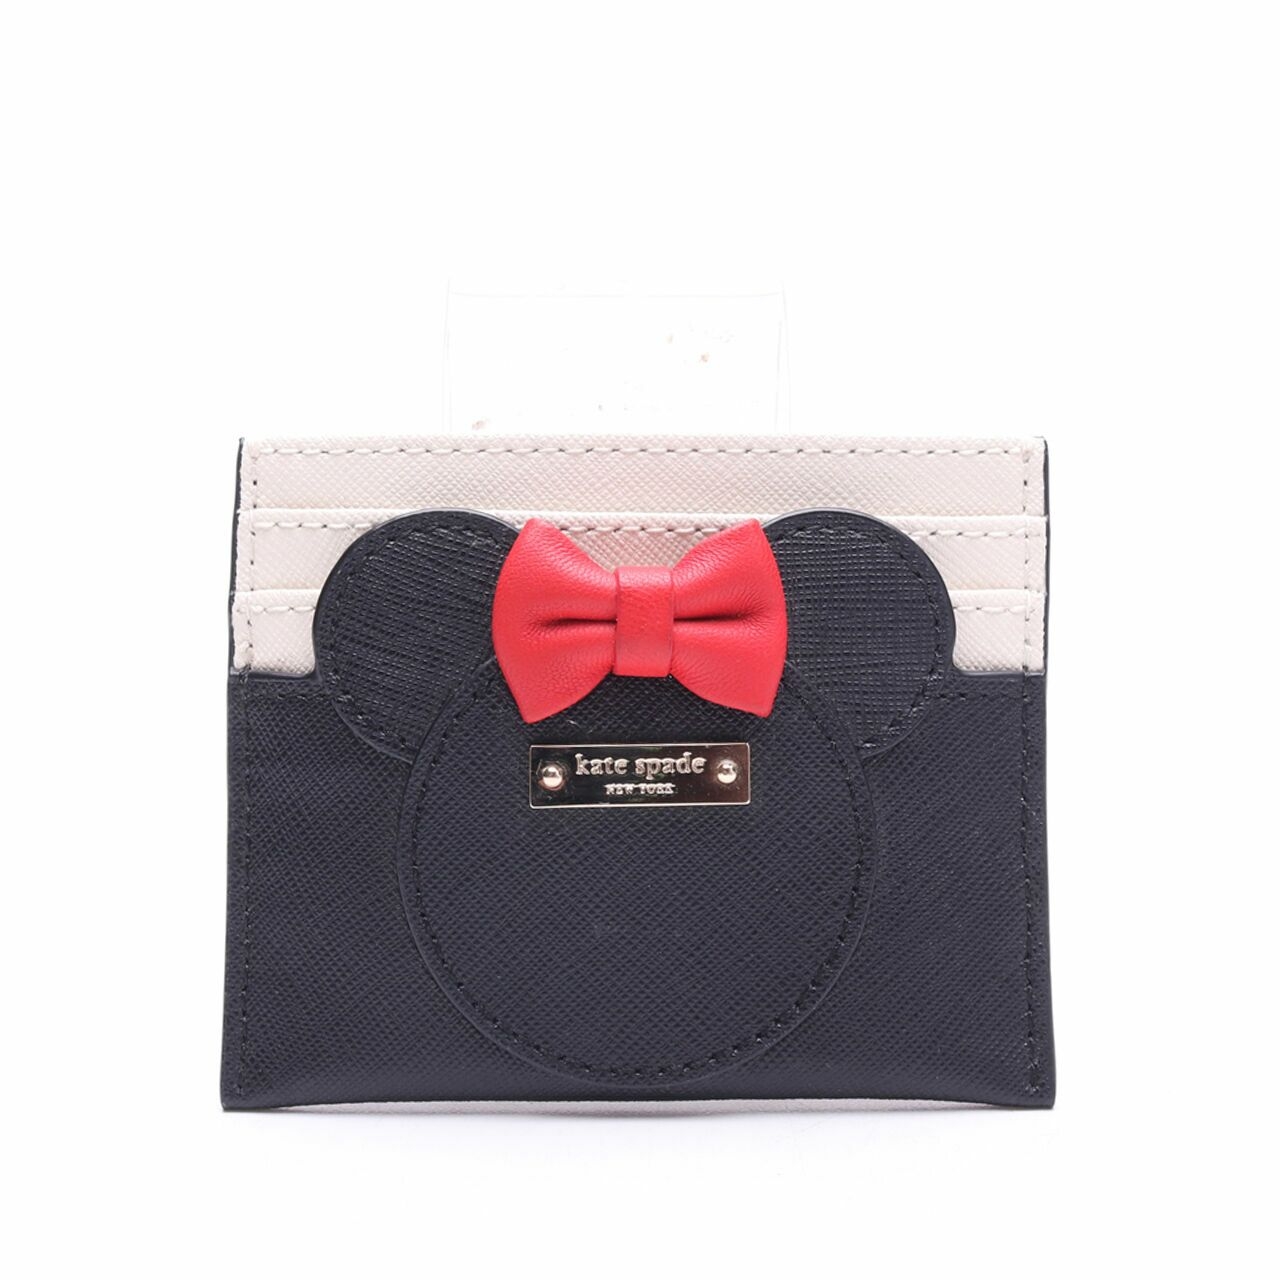 Kate Spade New York x Minnie Mouse Black/White Card Case